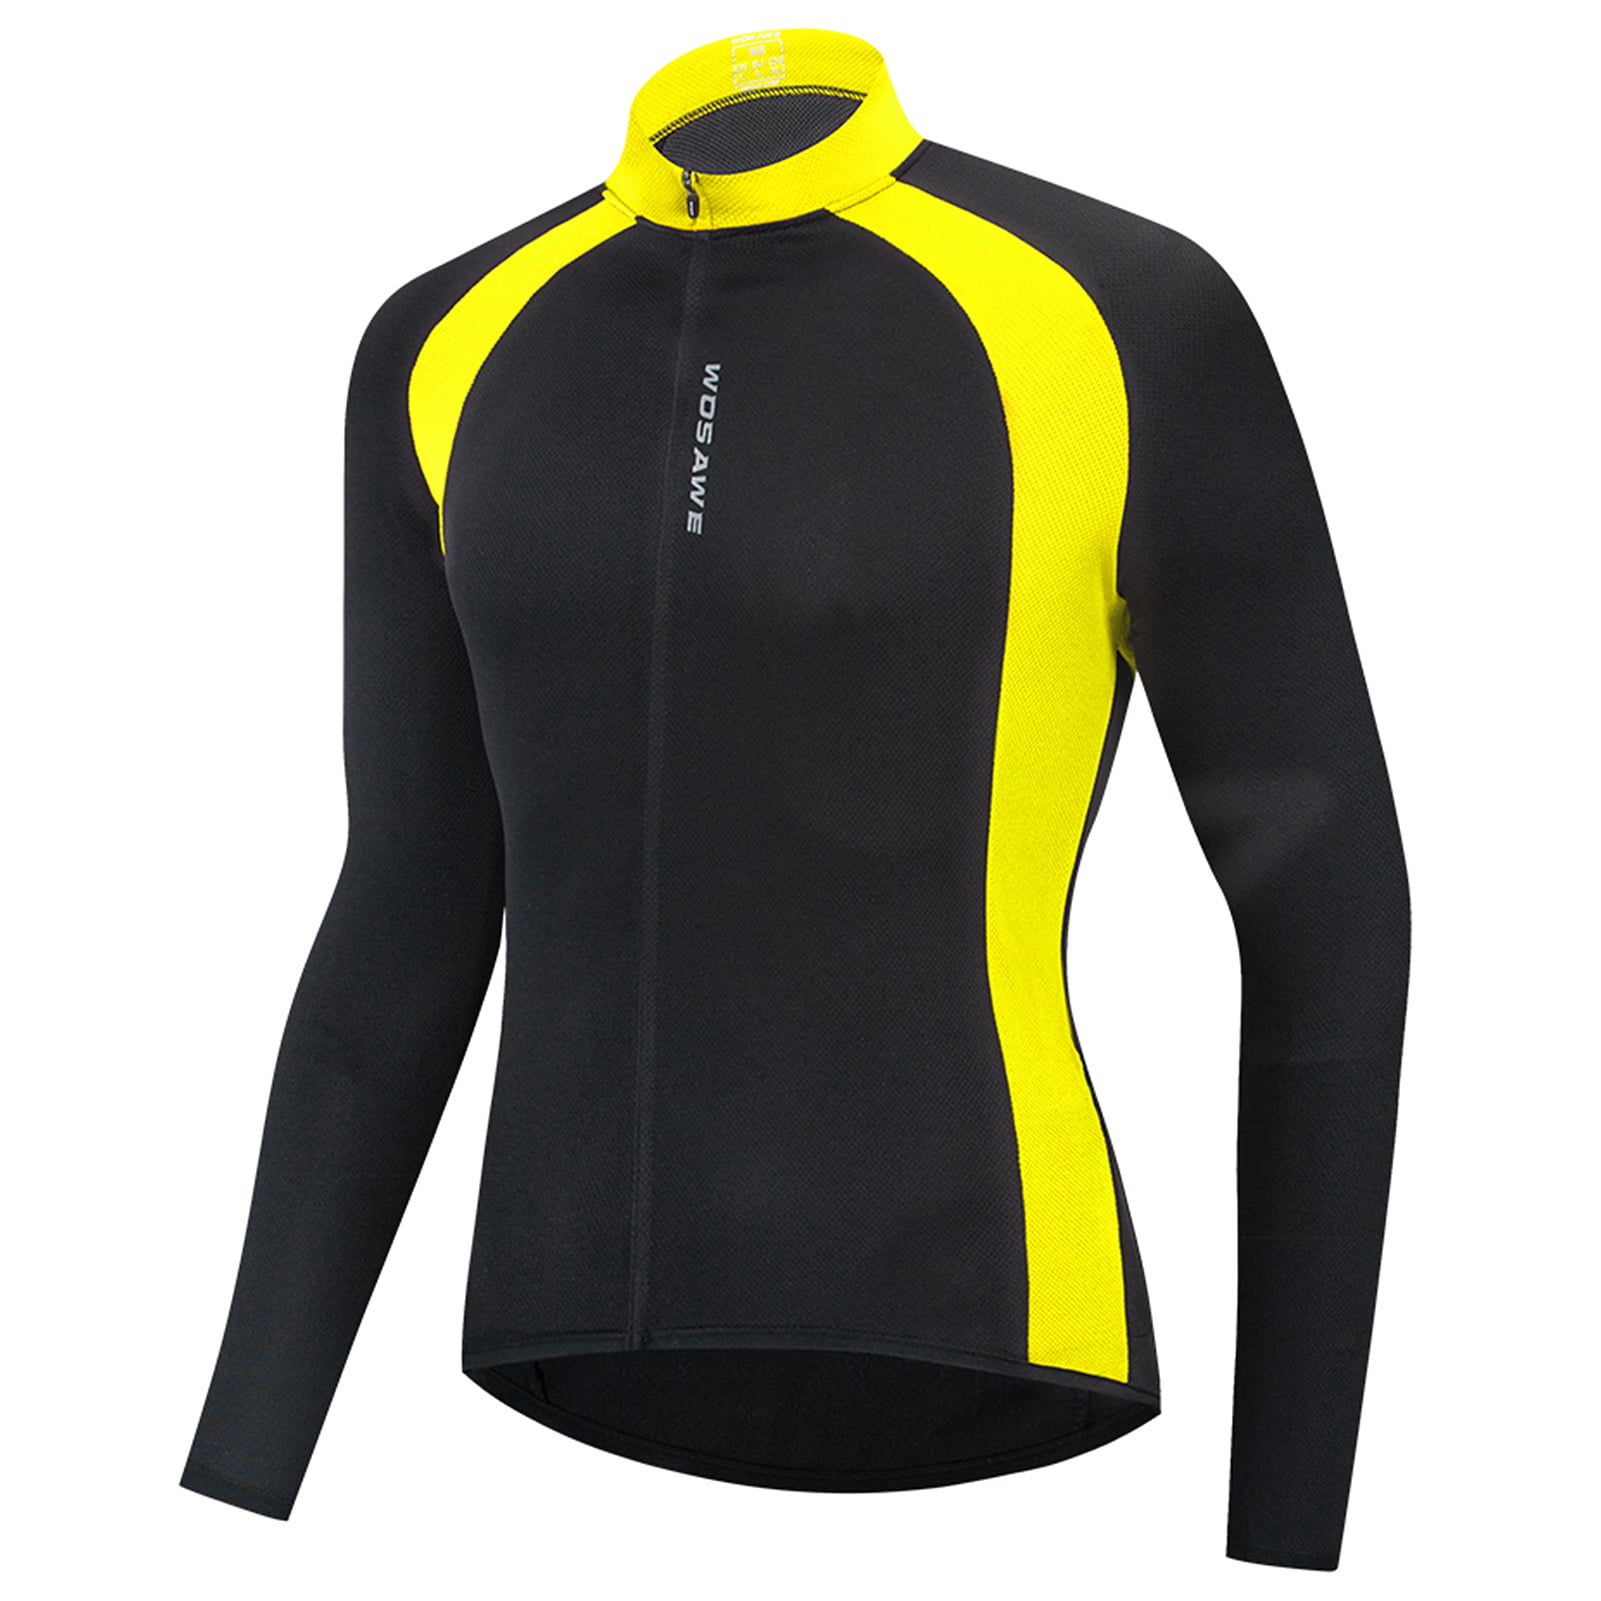 Details about   Biking Breathable Cycling Jersey Cycling Shirt Jerseys Bike Shirt Tops 